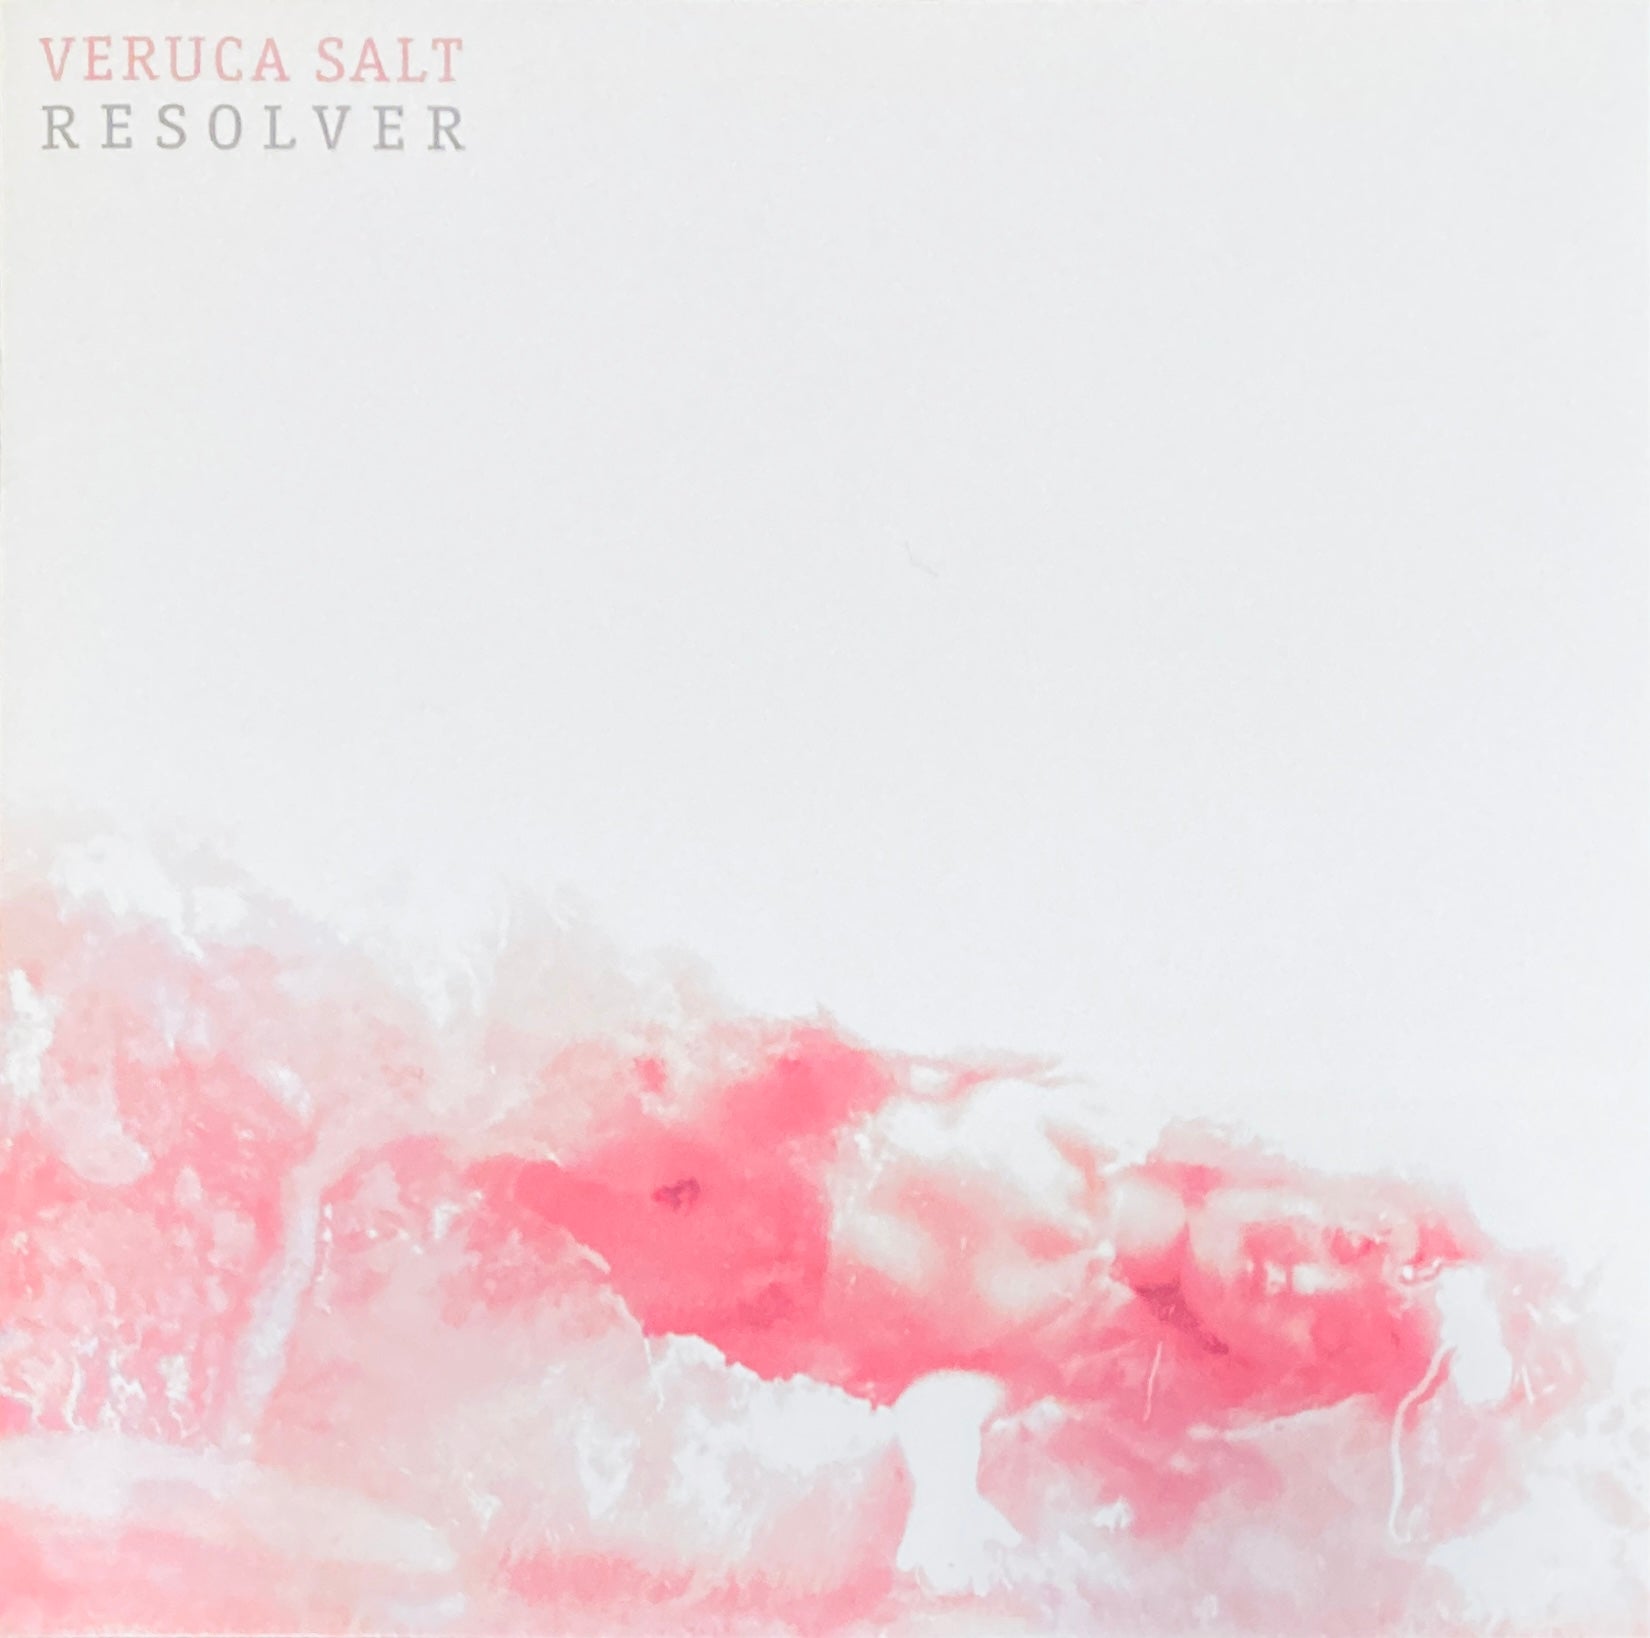 Veruca Salt “Resolver” CD (2000)